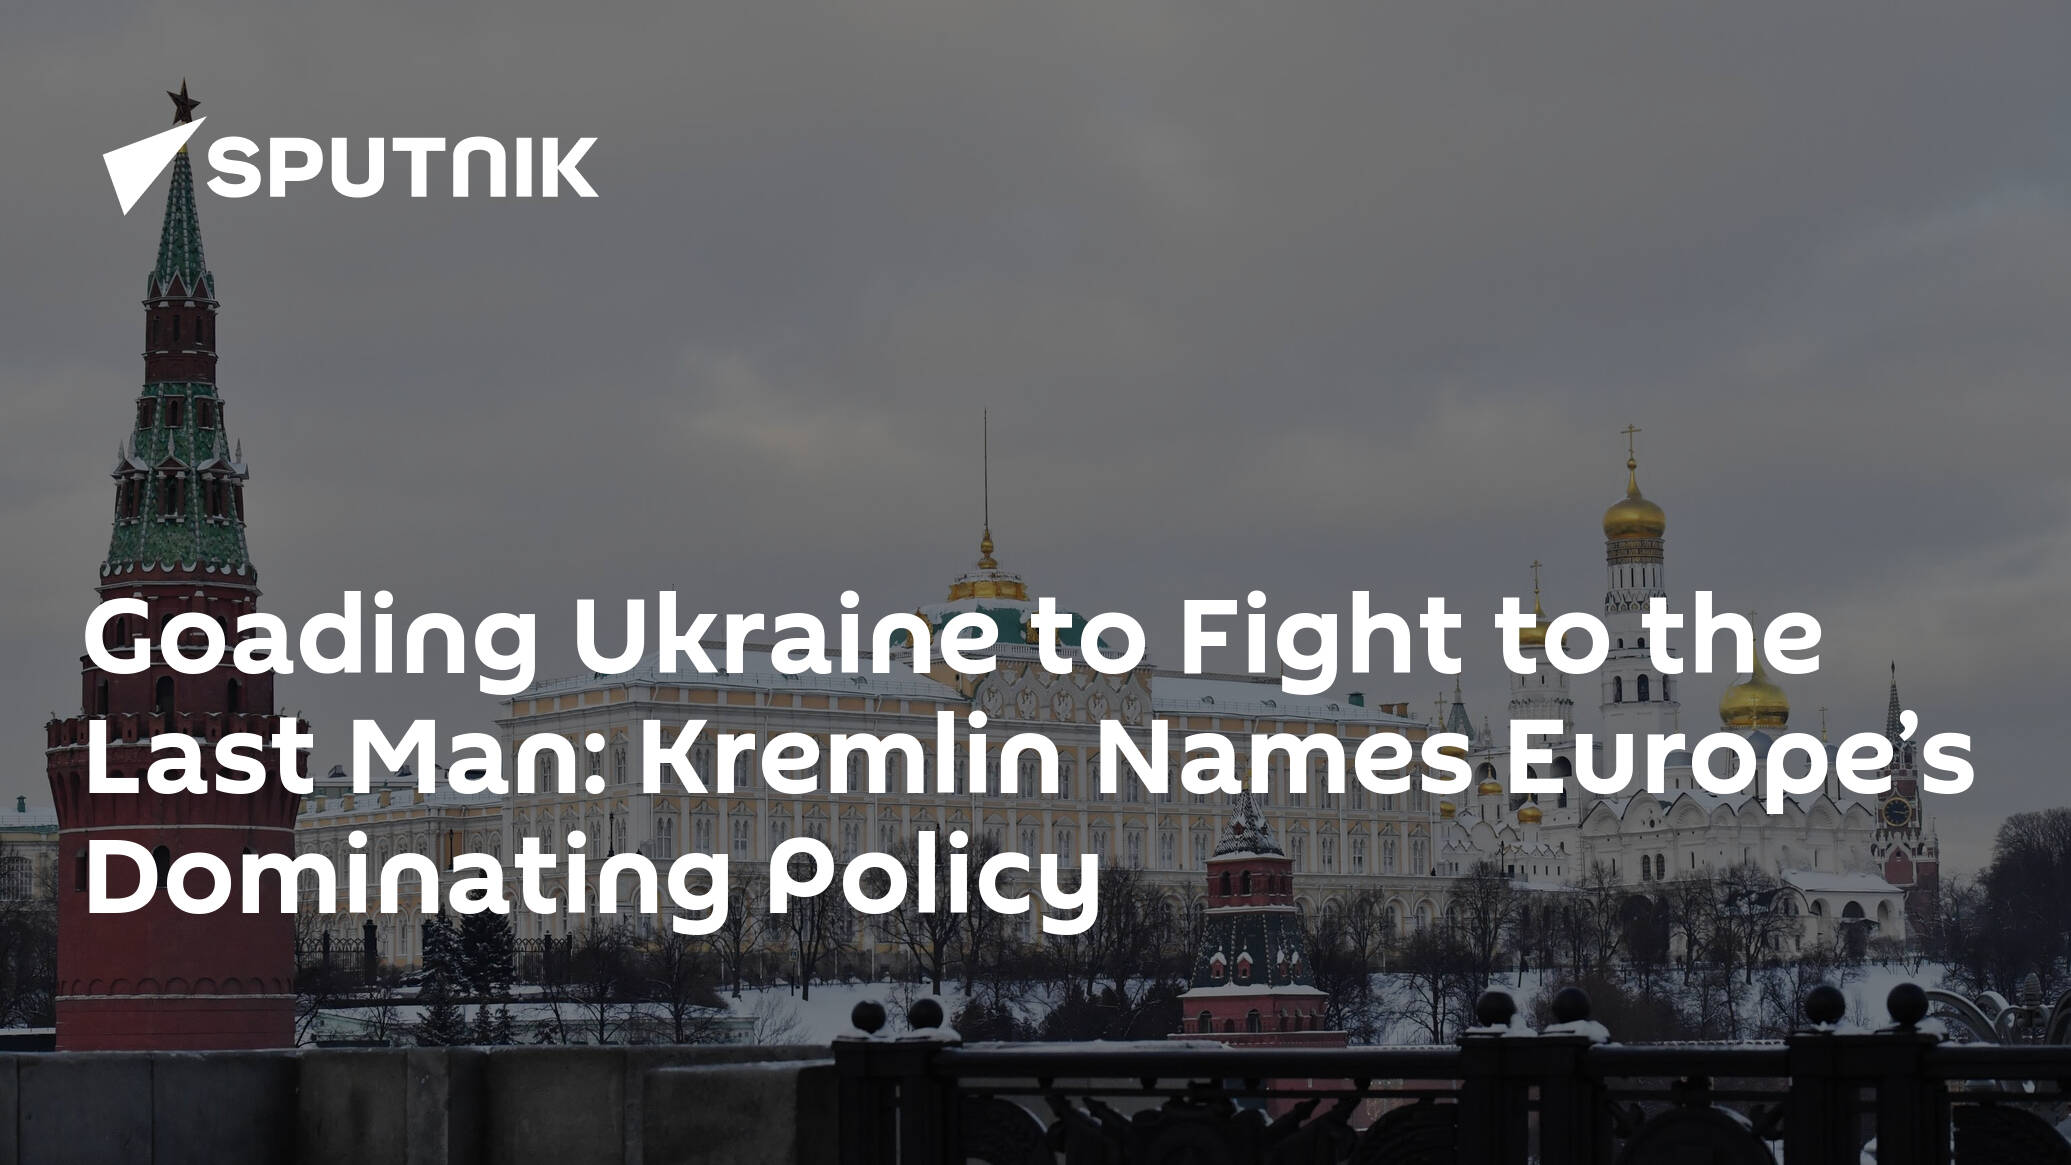 Kremlin Calls Provoking Ukraine to 'Fight Until Last Man' Dominant